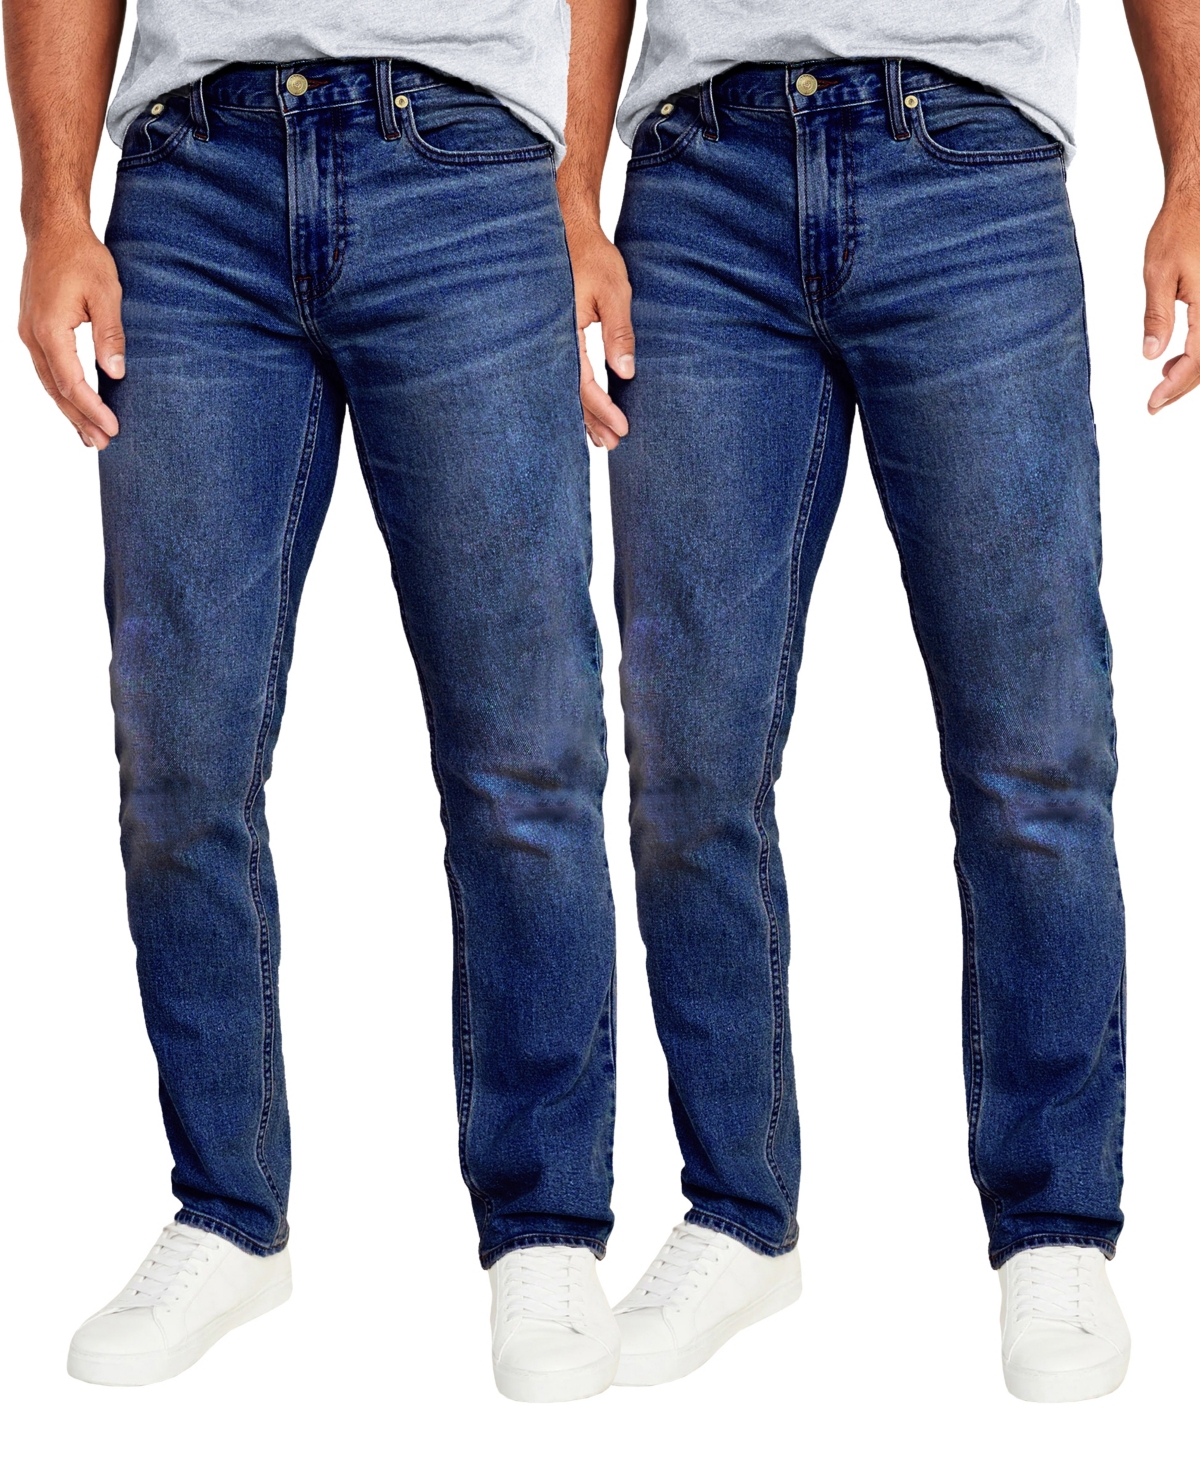 Men's Flex Stretch Slim Straight Jeans, Pack of 2 - Gray